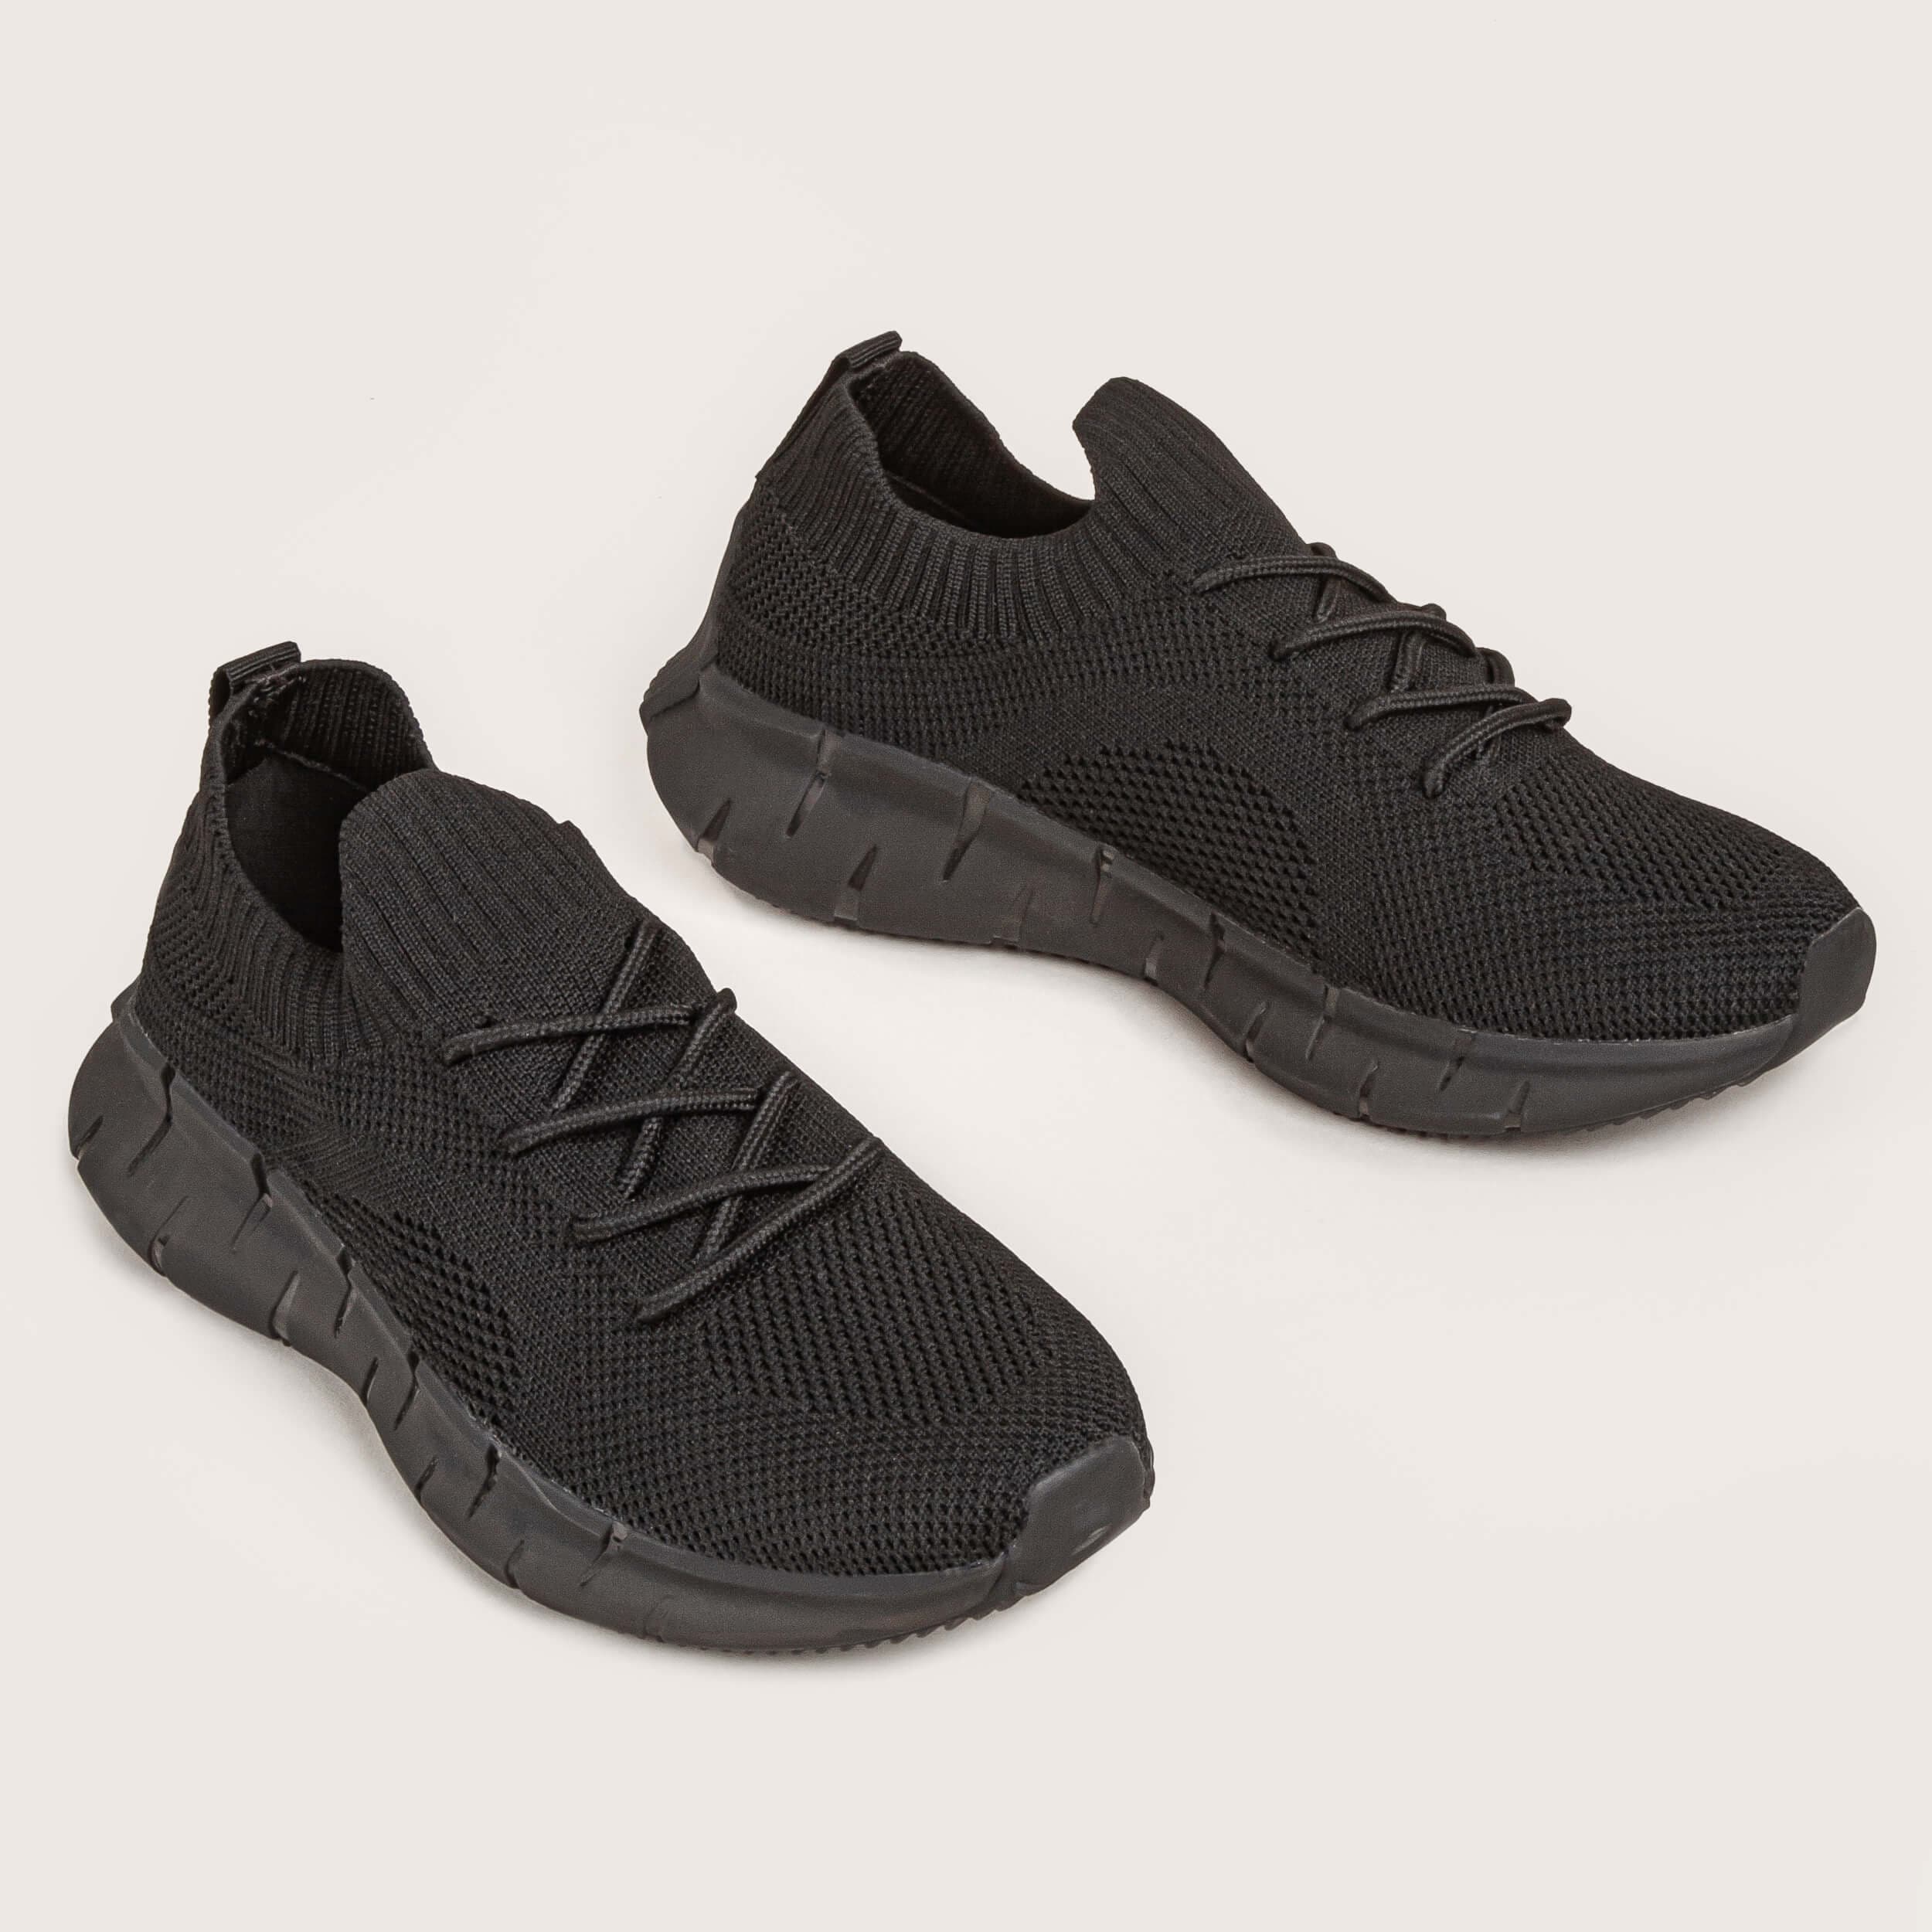 Wrok Peer Mona Lisa Burst Flyknit Sneaker - Coral | DNA Footwear®